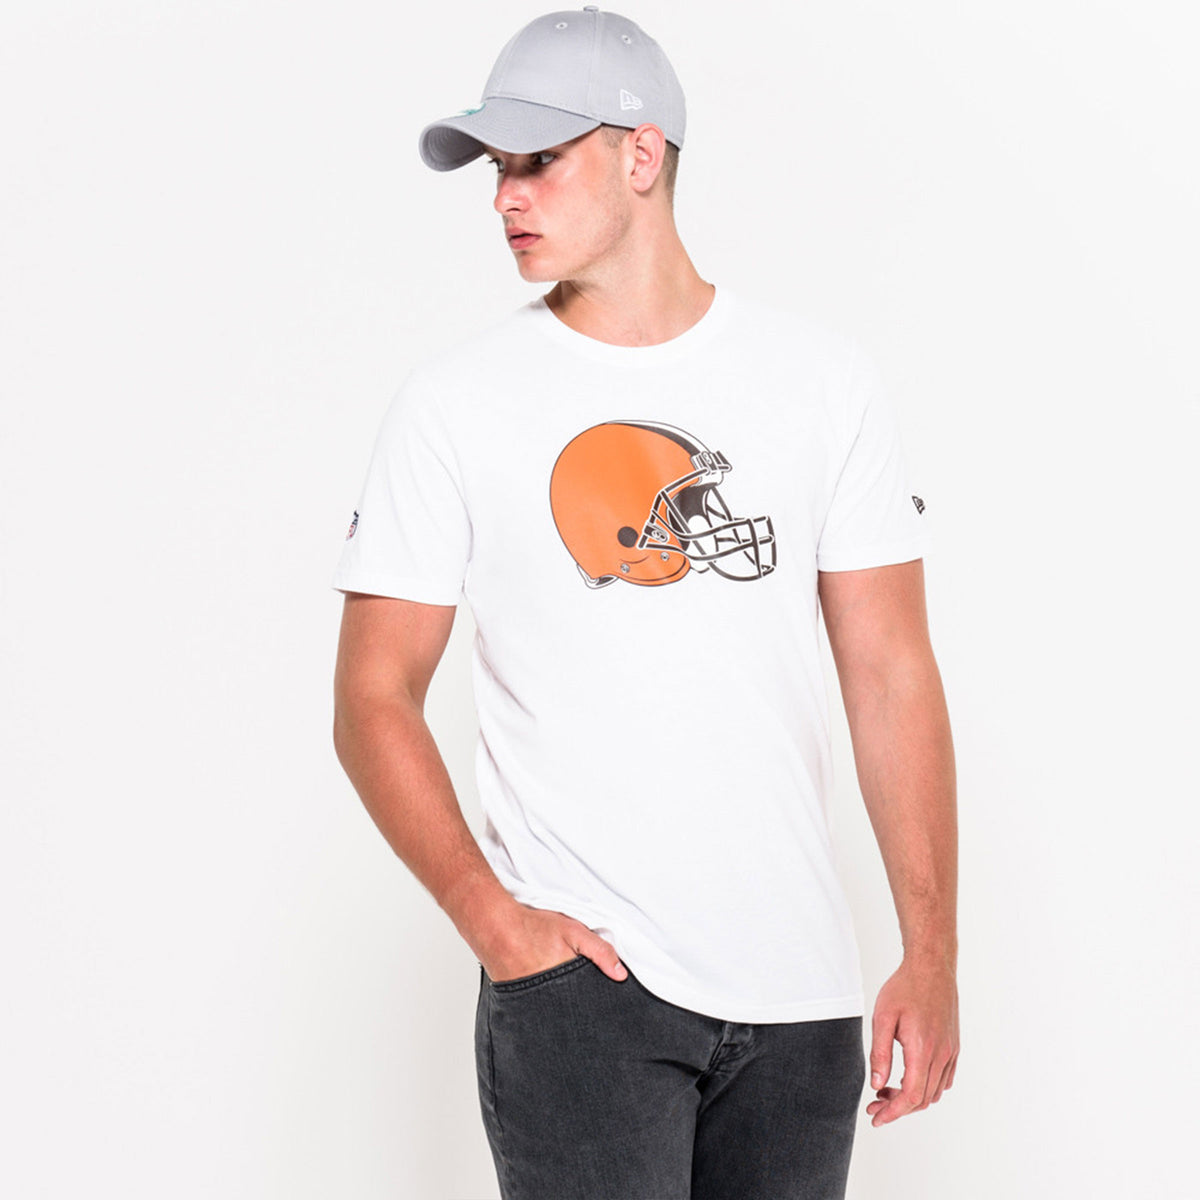 NFL Cleveland Browns Team Logo T-Shirt White